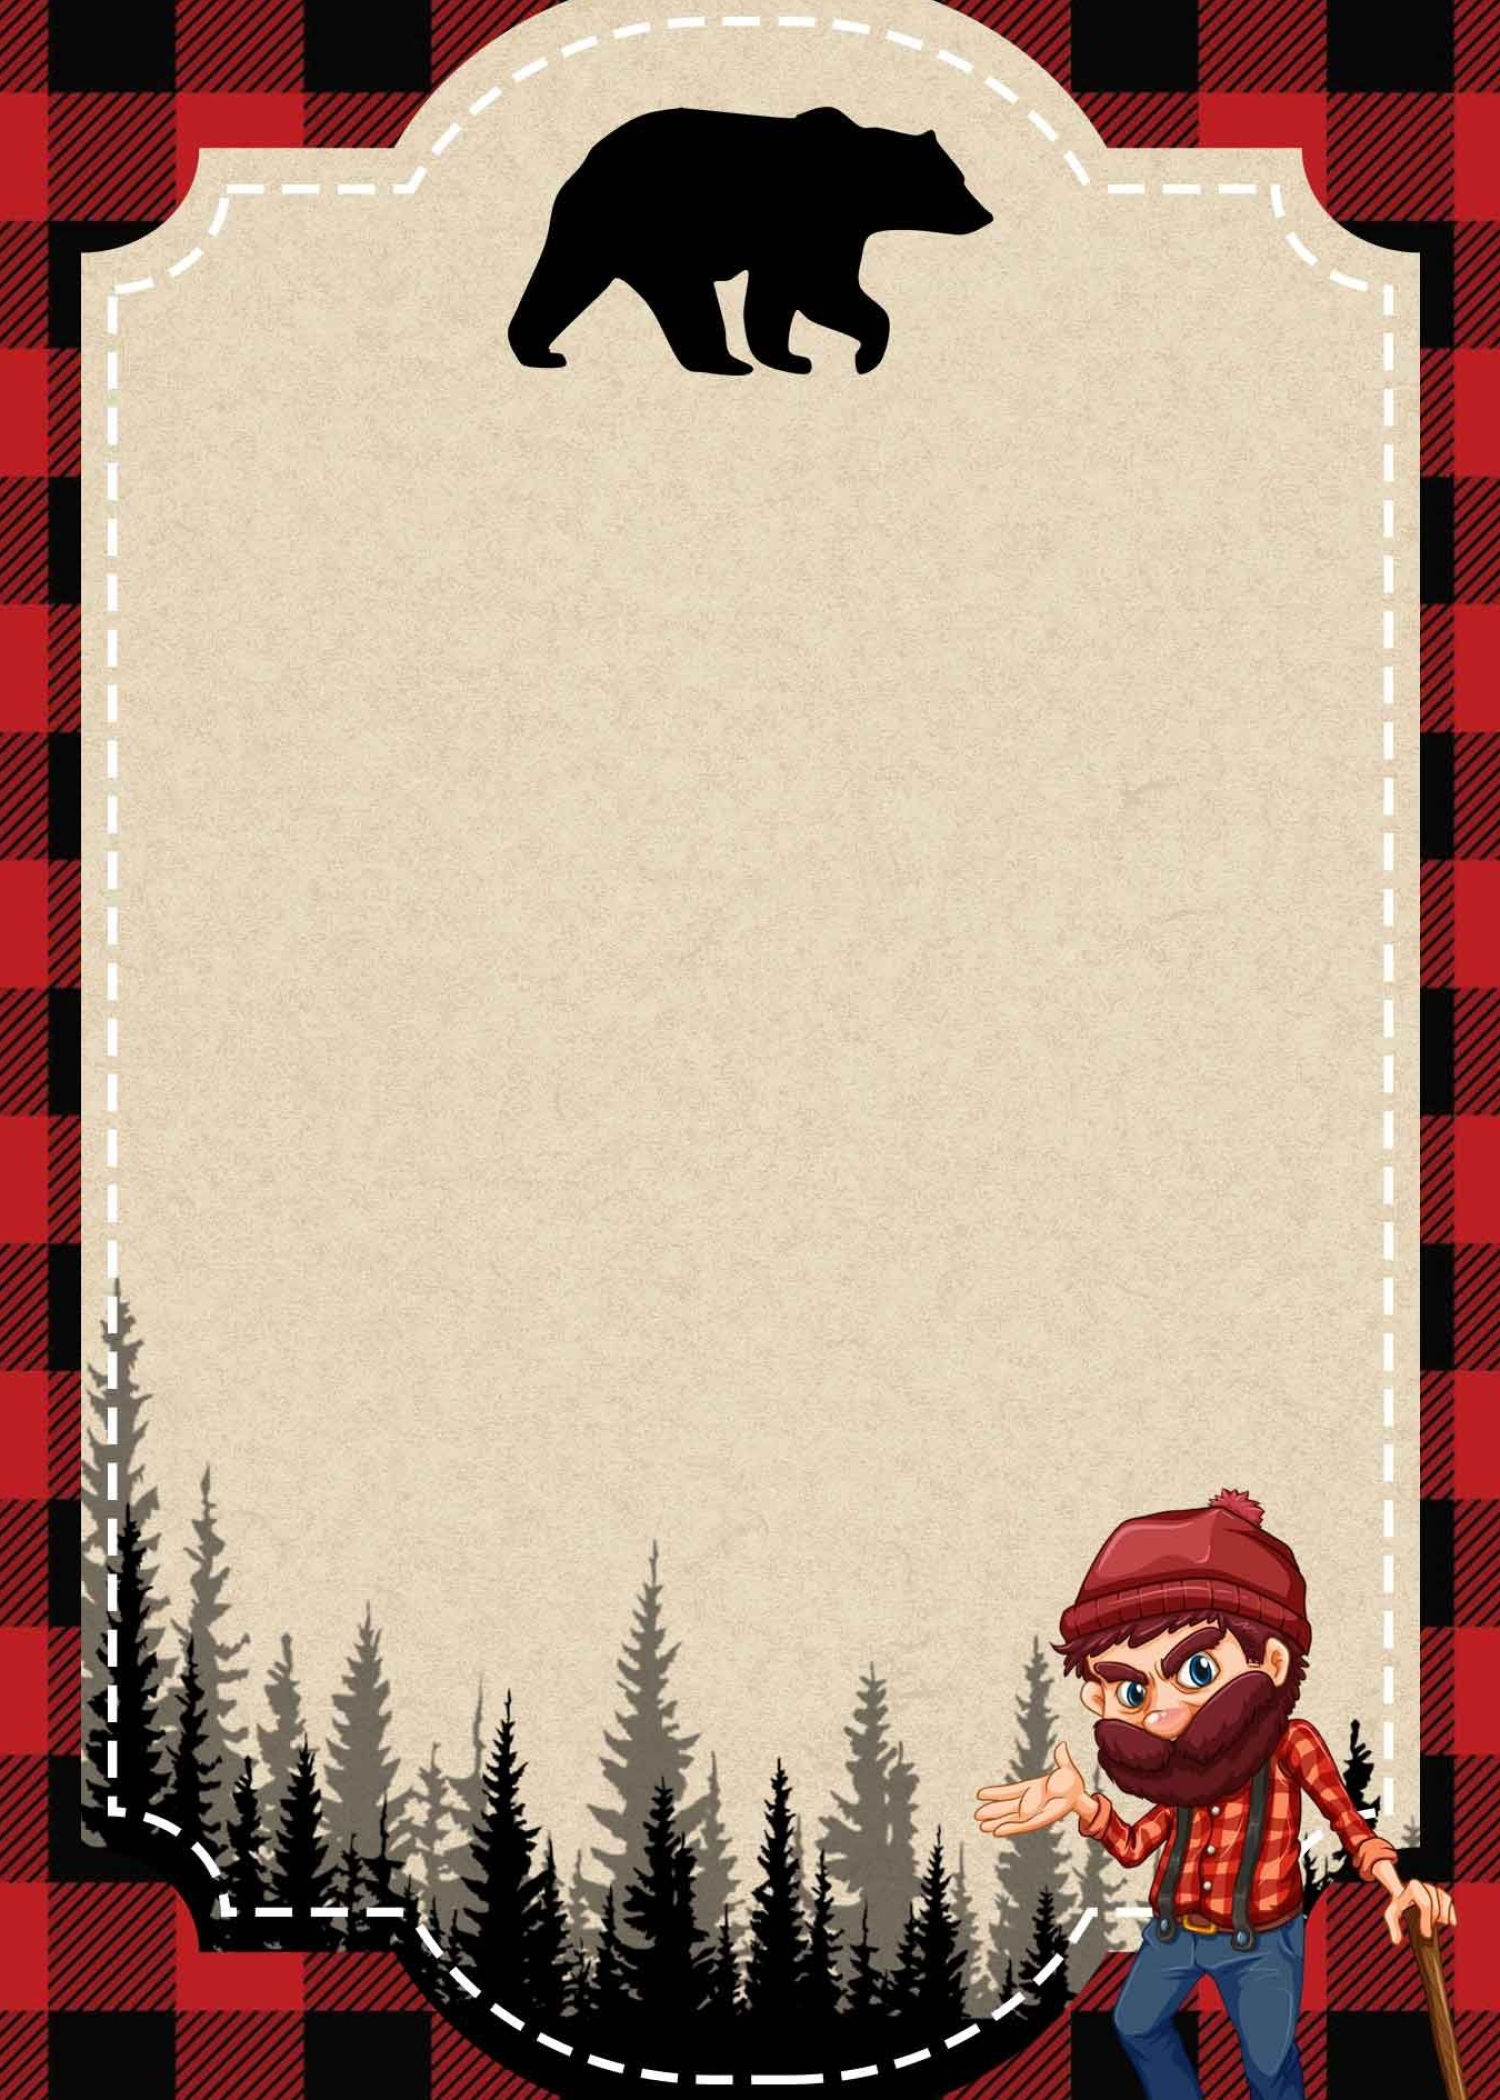 HD wallpaper, Birthday Card Template, Mobile Hd Lumberjack Background Photo, Free Design, 1500X2100 Hd Phone, Printable Lumberjack Birthday Invitation, Birthday Invitation Templates